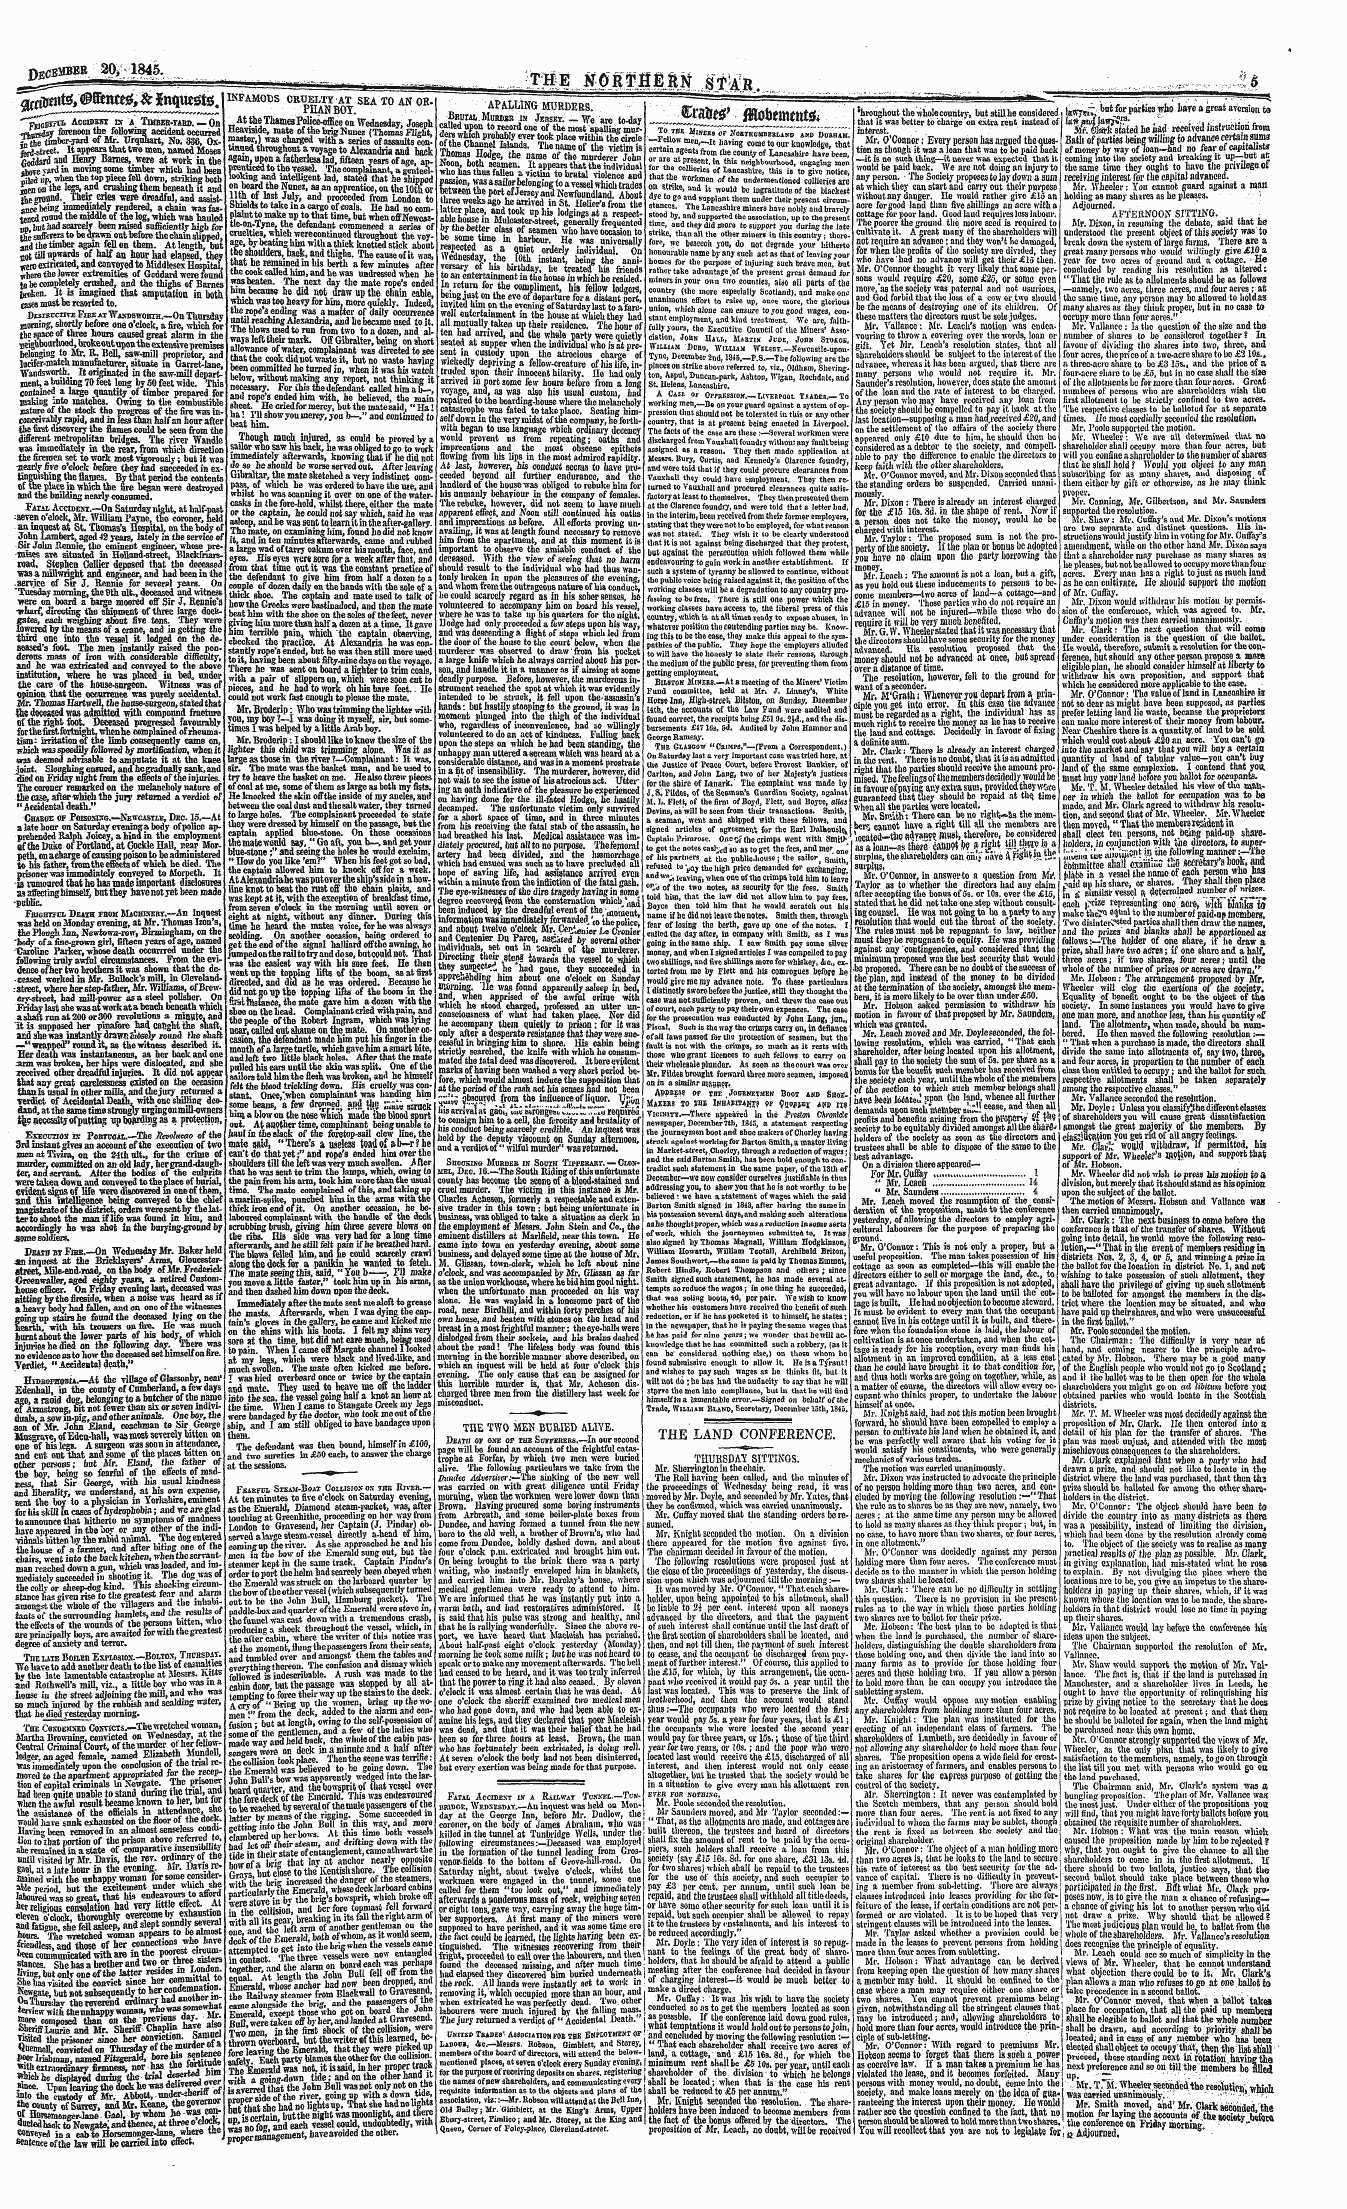 Northern Star (1837-1852): jS F Y, 4th edition - Fatal Acciuext In A Railwat Tunnel.—Titn...